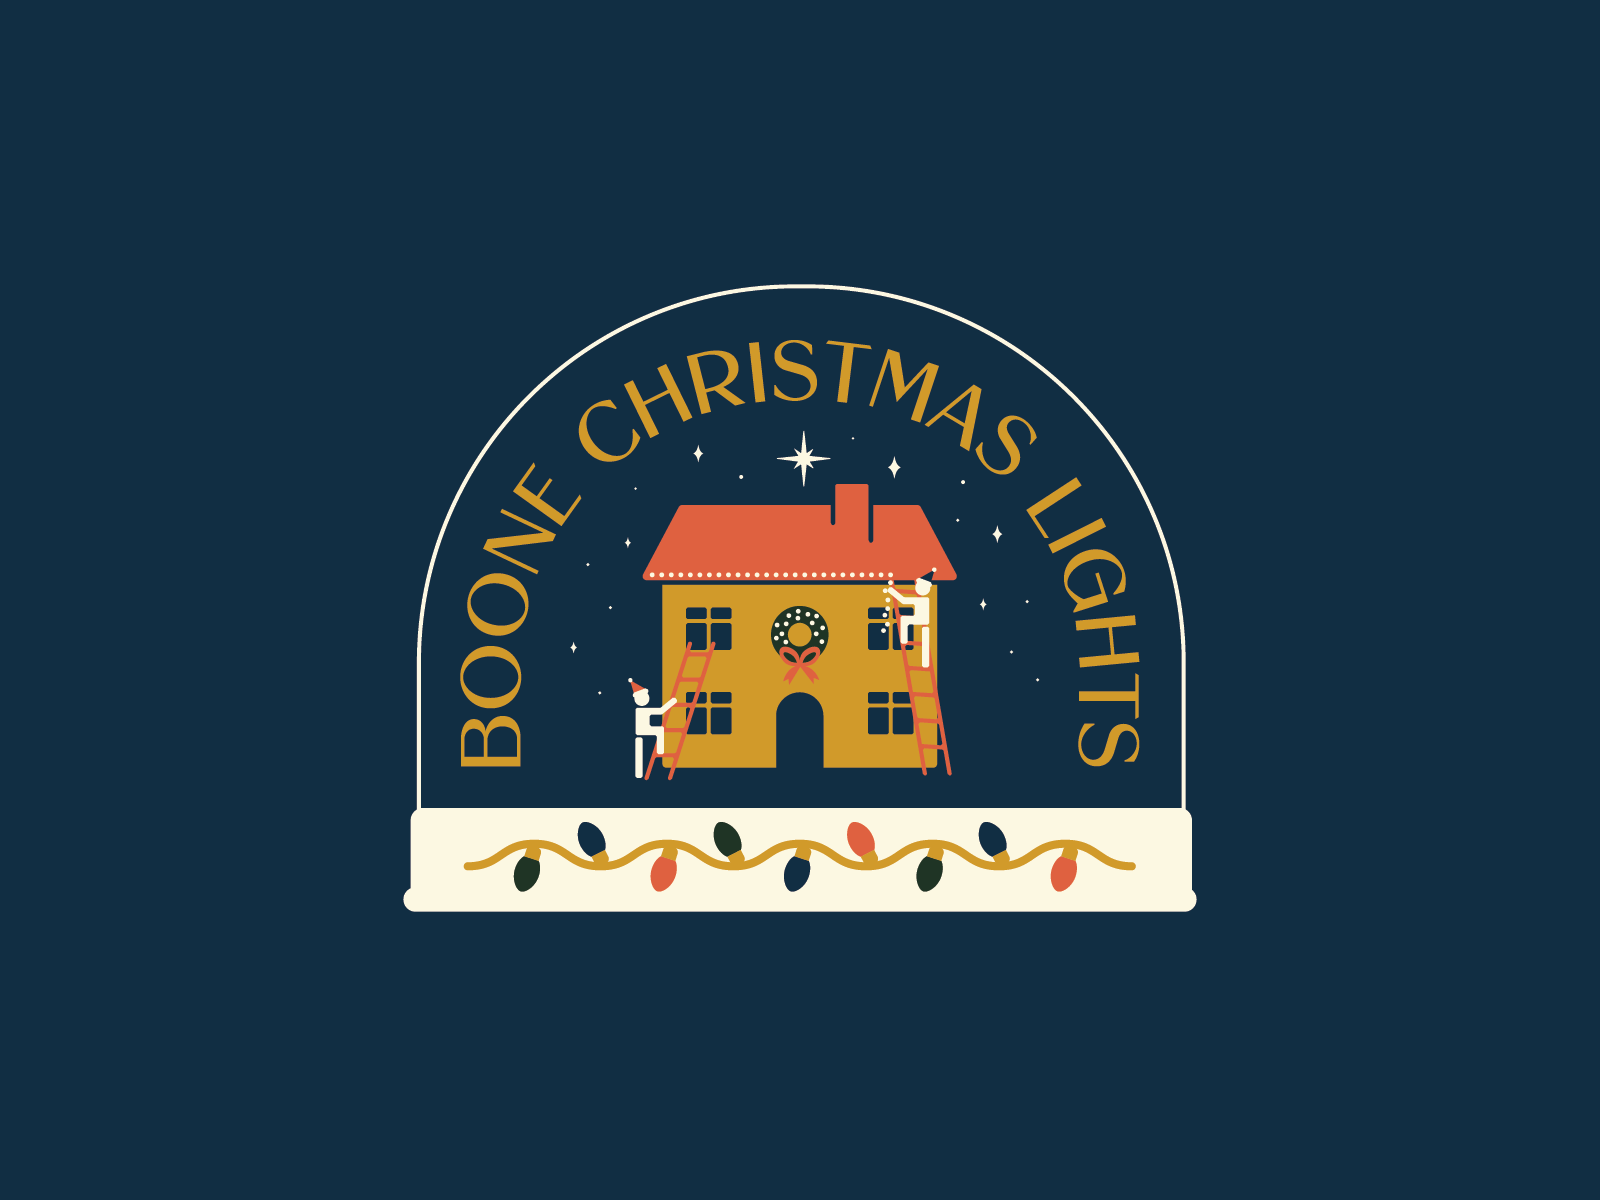 Boone Christmas Lights by Chelsea Burkett on Dribbble